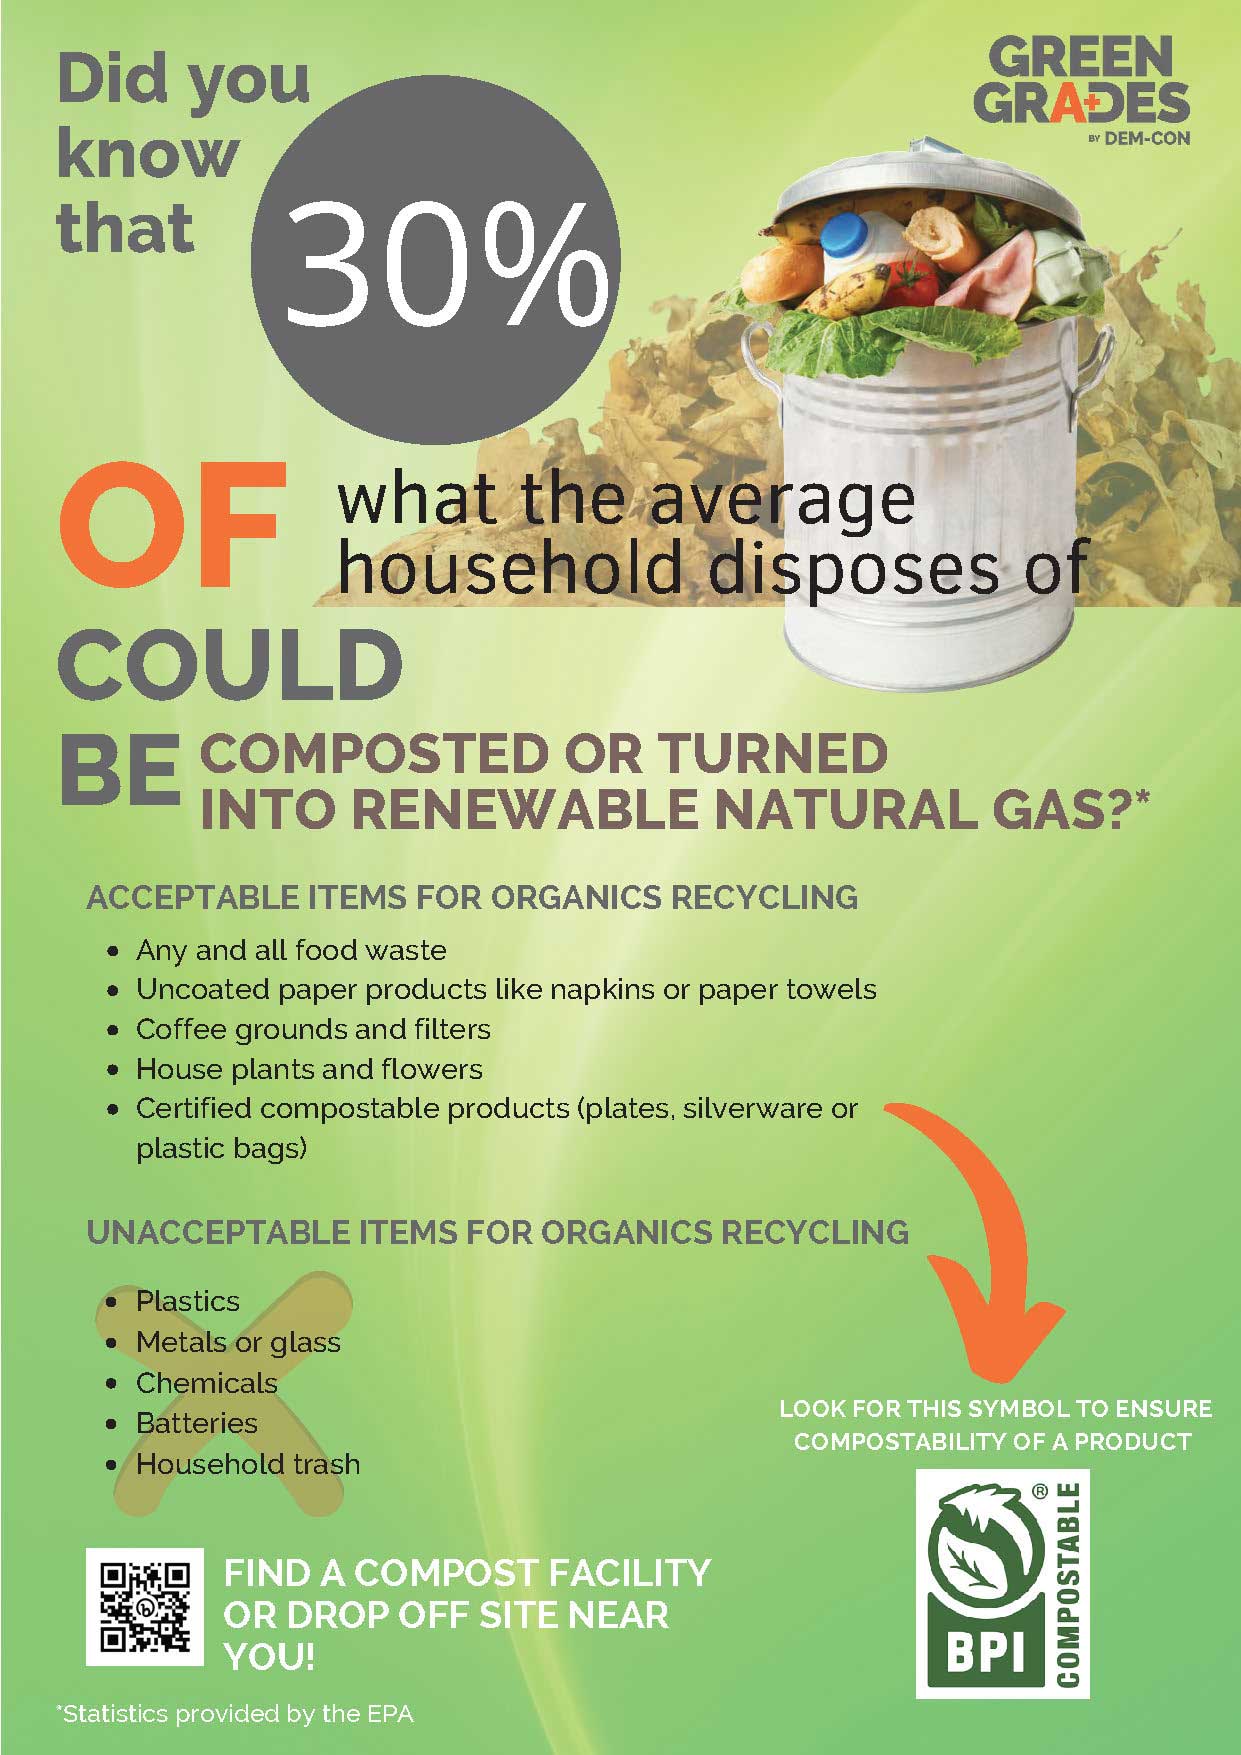 A fact sheet about organic recycling